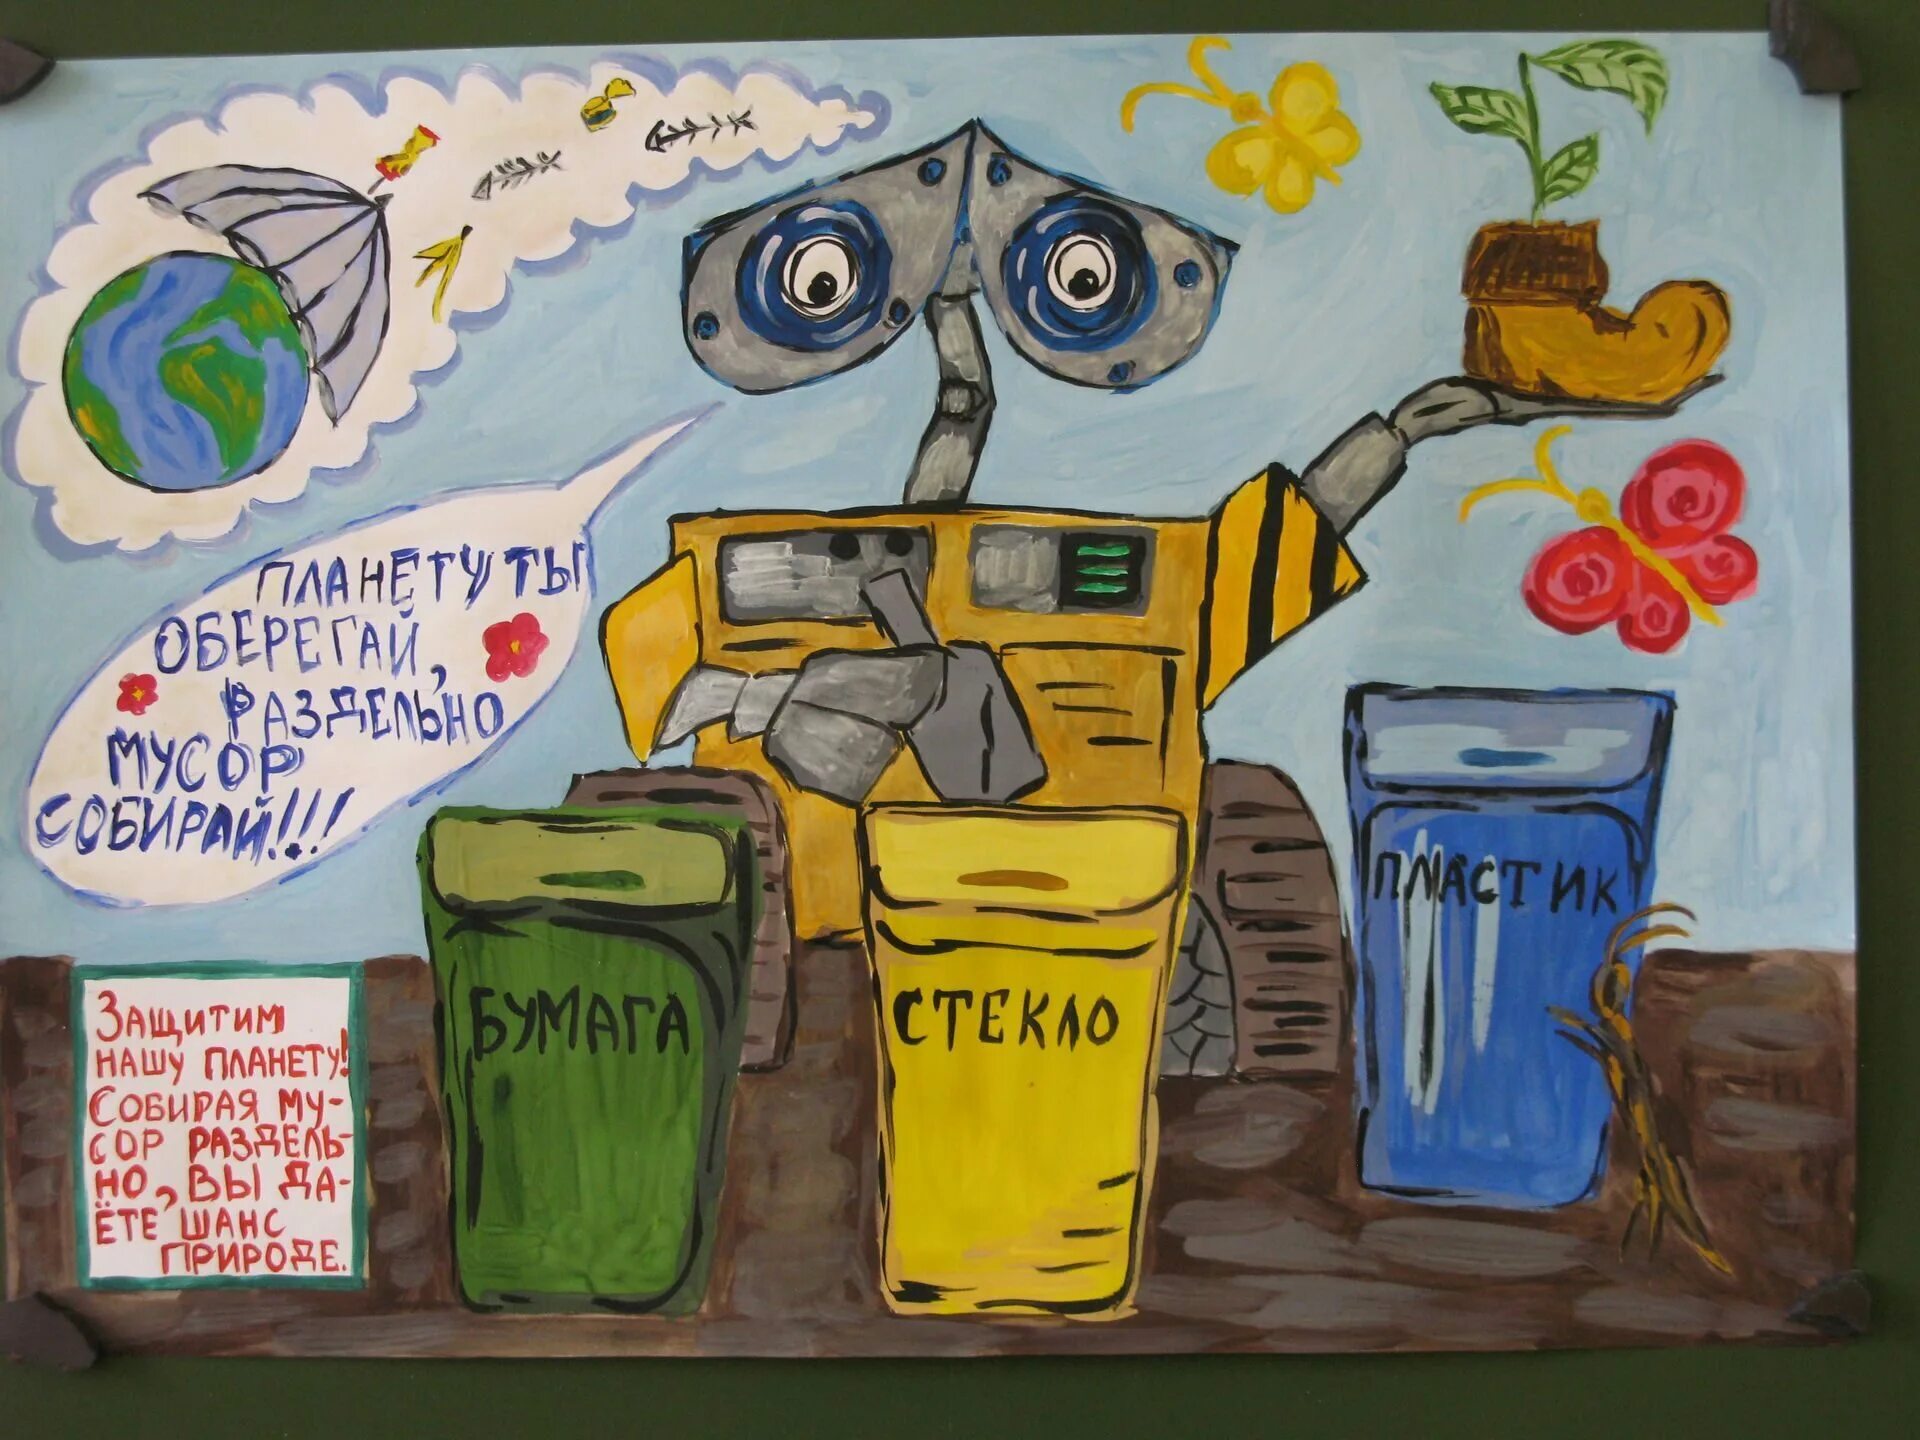 Плакат экология рисунок. Экологический плакат. Плакат на экологическую тему. Утилизация отходов плакат.